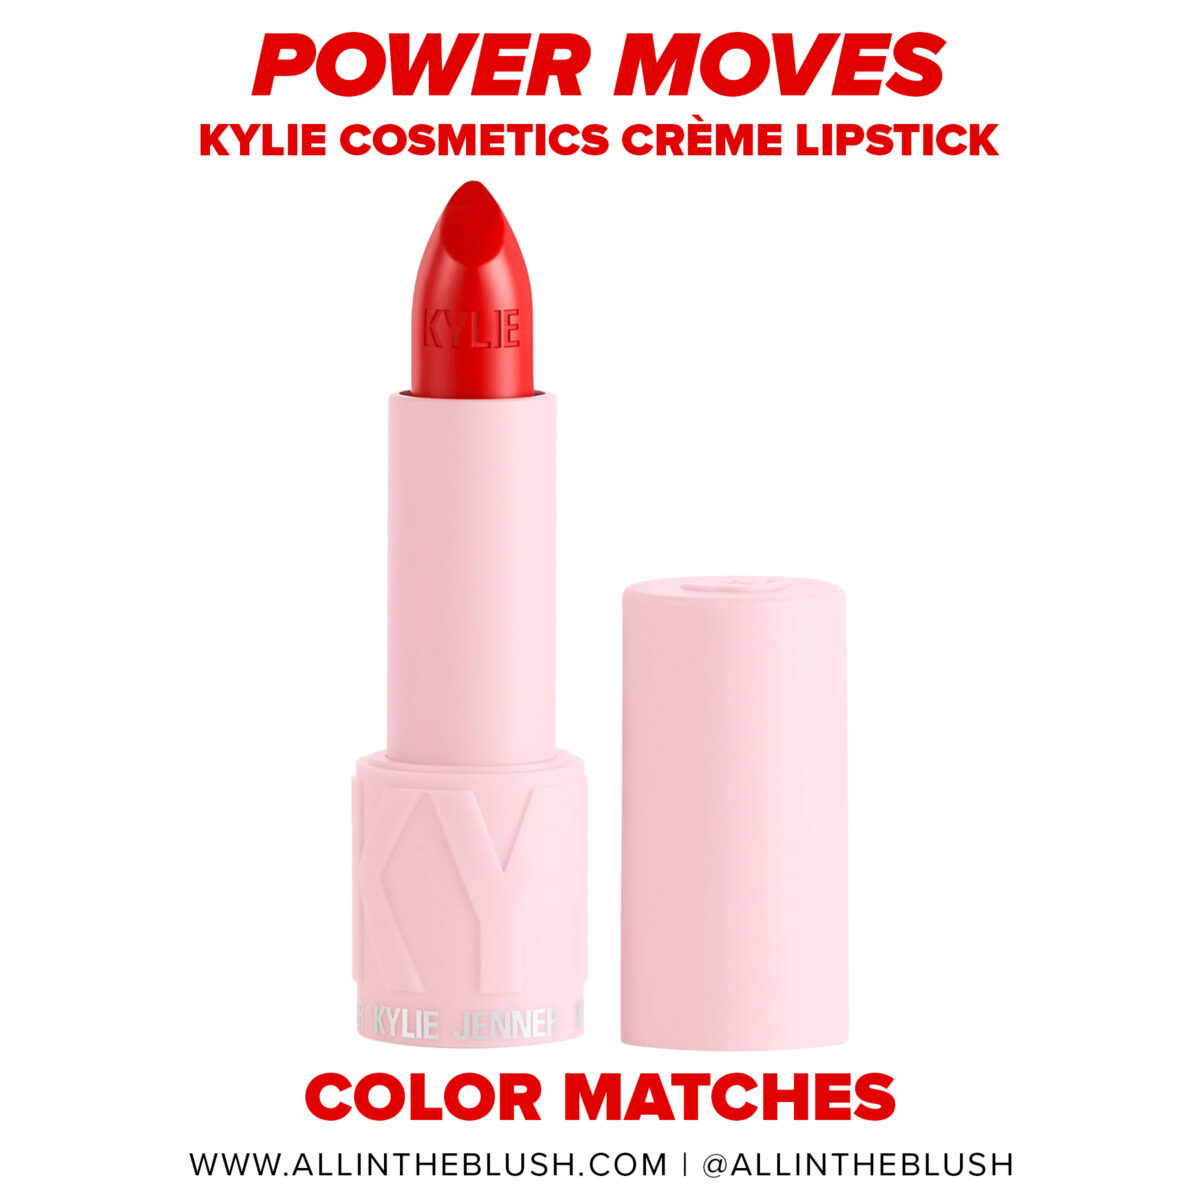 Kylie Cosmetics Power Move Crème Lipstick Color Matches